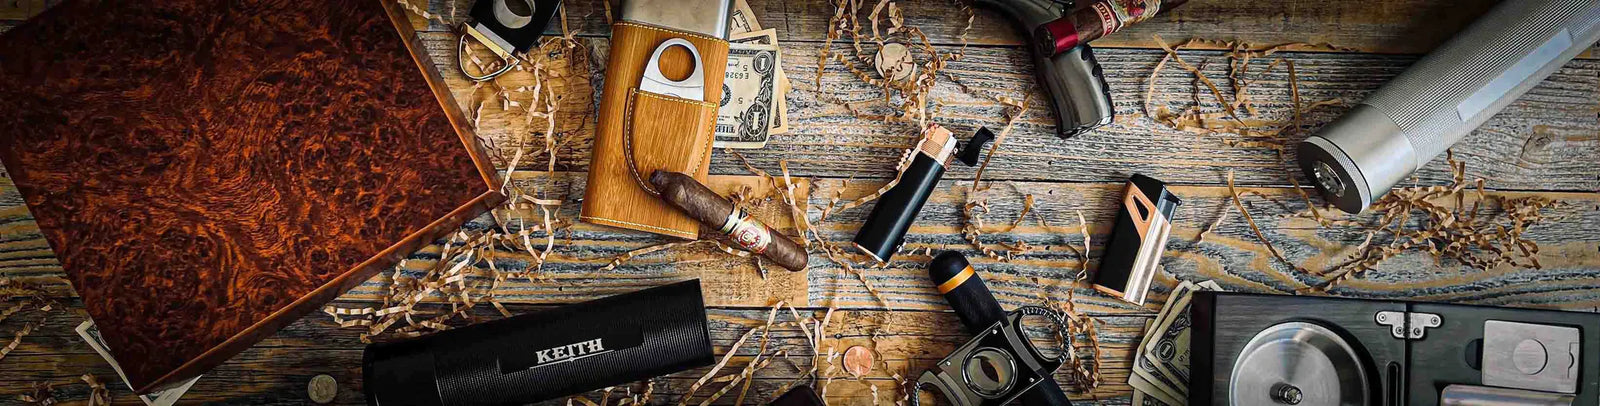 Visol Products Trek Cigar Case, Size: Leather, Black